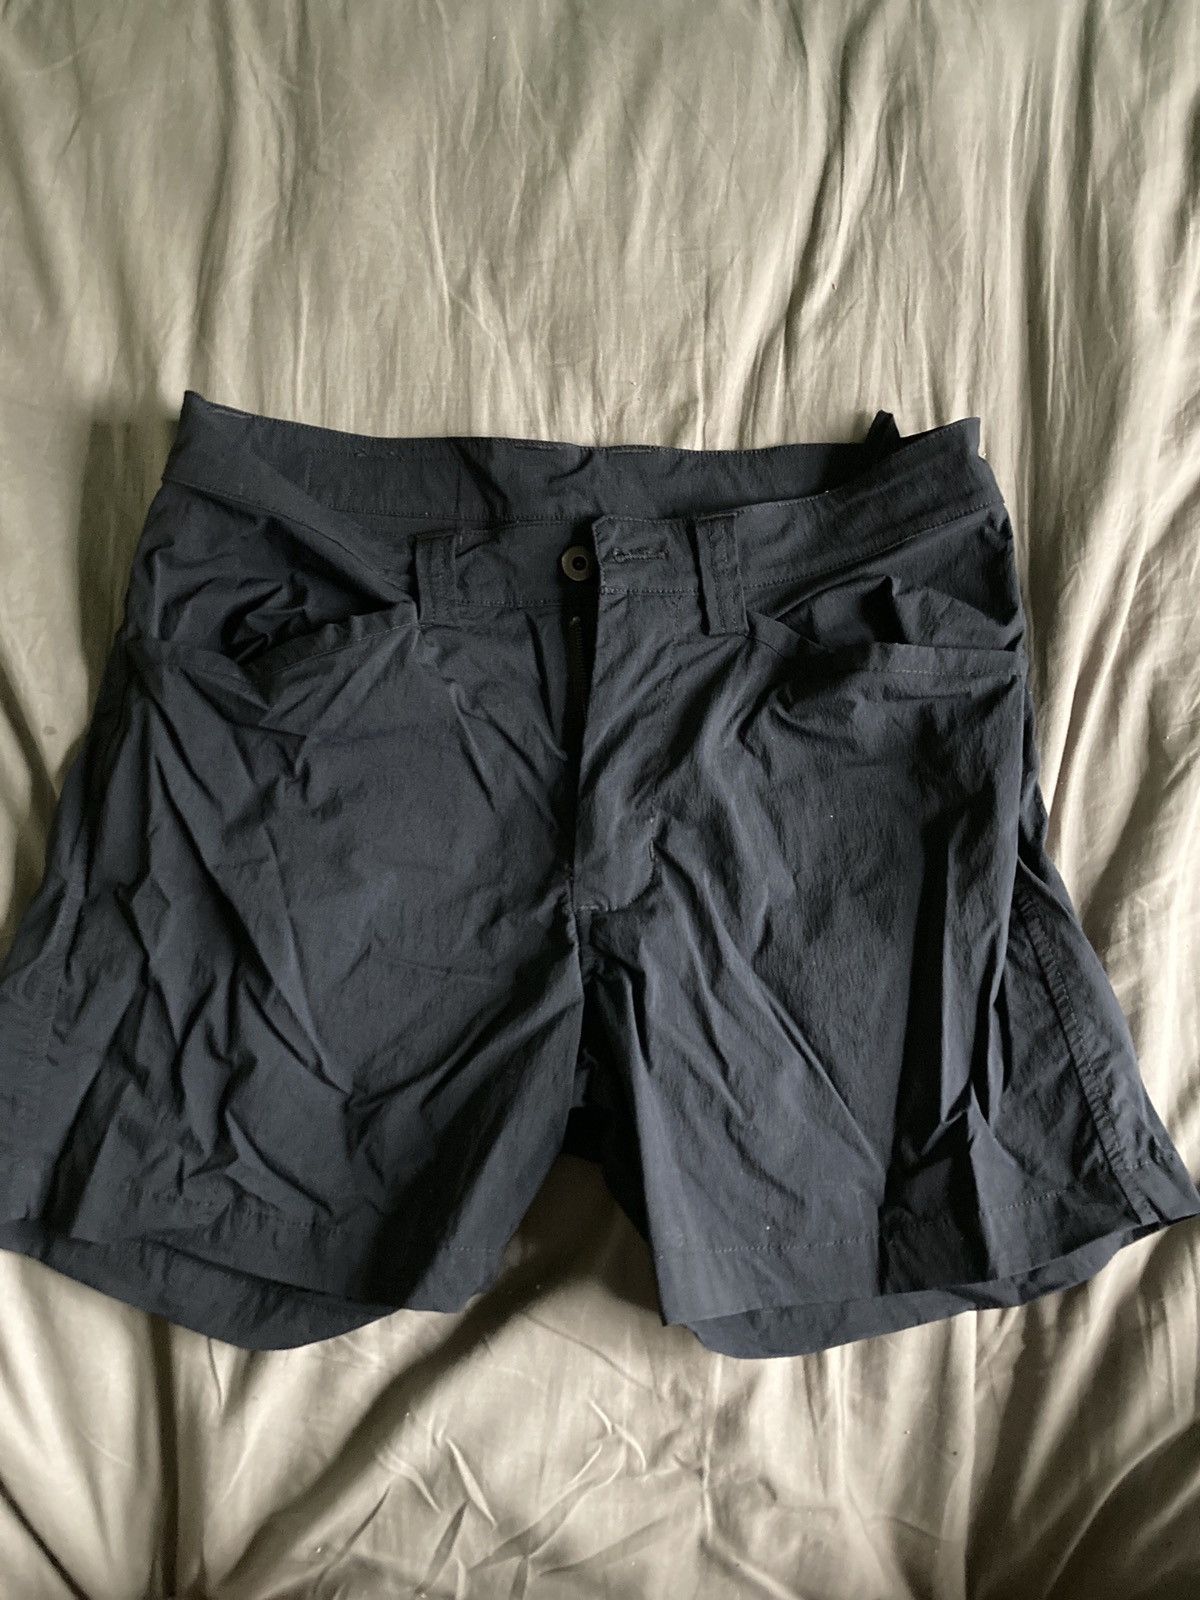 Goruck Goruck Simple Shorts | Grailed